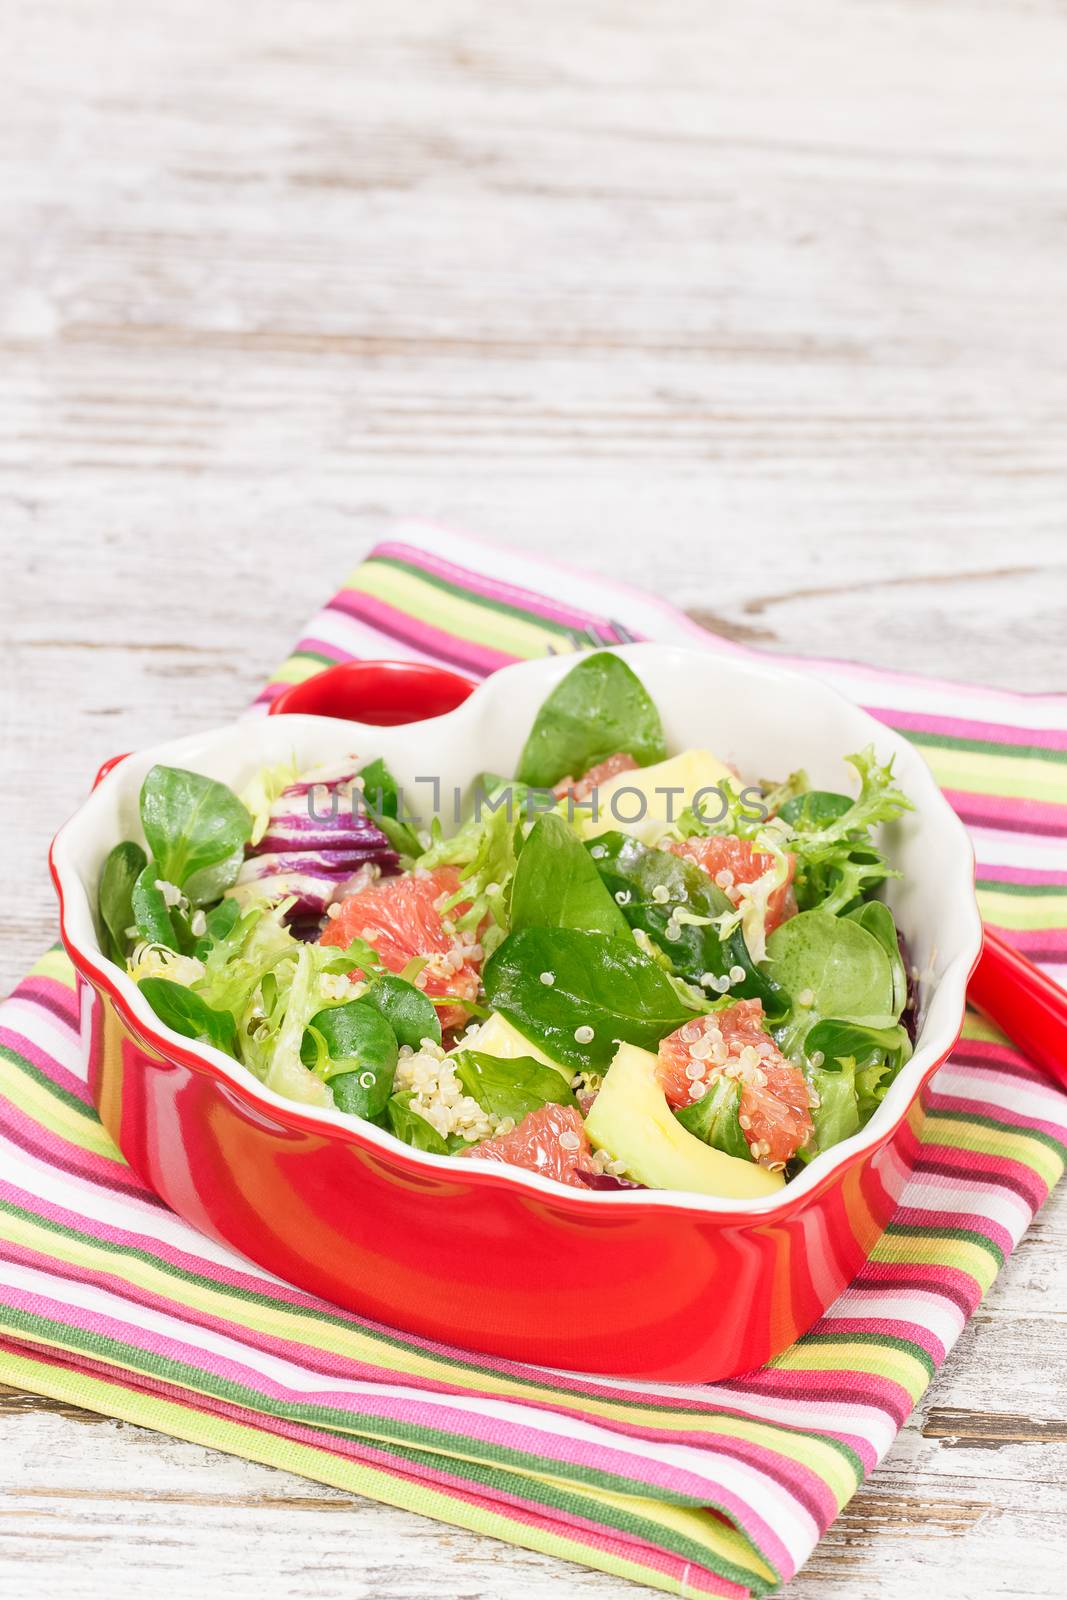 Spinach and quinoa salad with grapefruit and avocado.